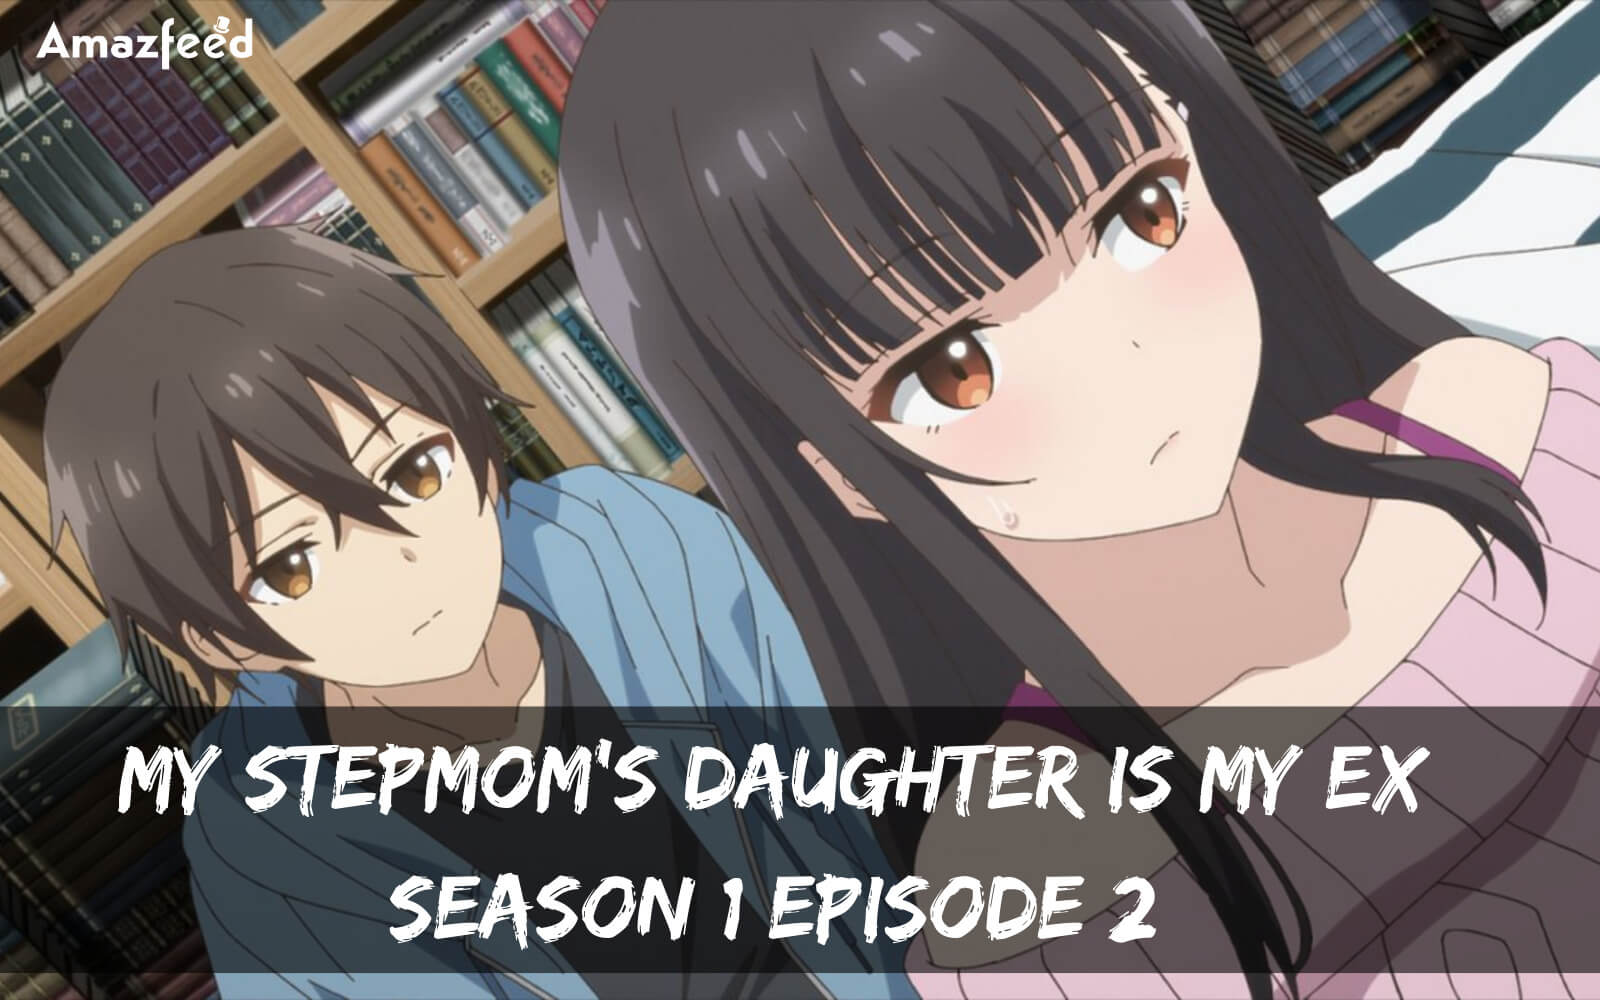 My Stepmom’s Daughter Is My Ex Season 1 Episode 2 release date